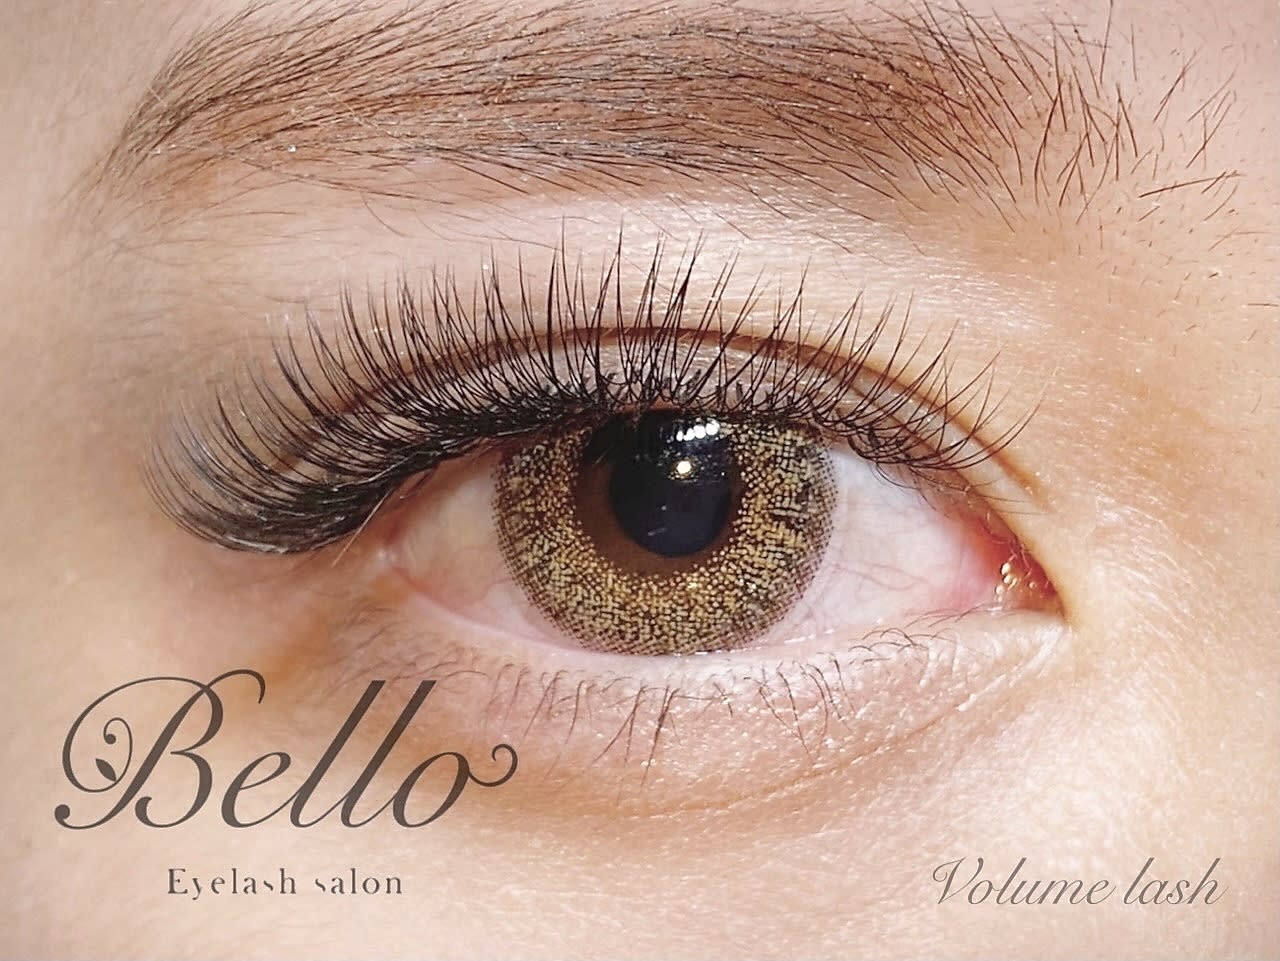 Bello eyelash桂店のアイキャッチ画像